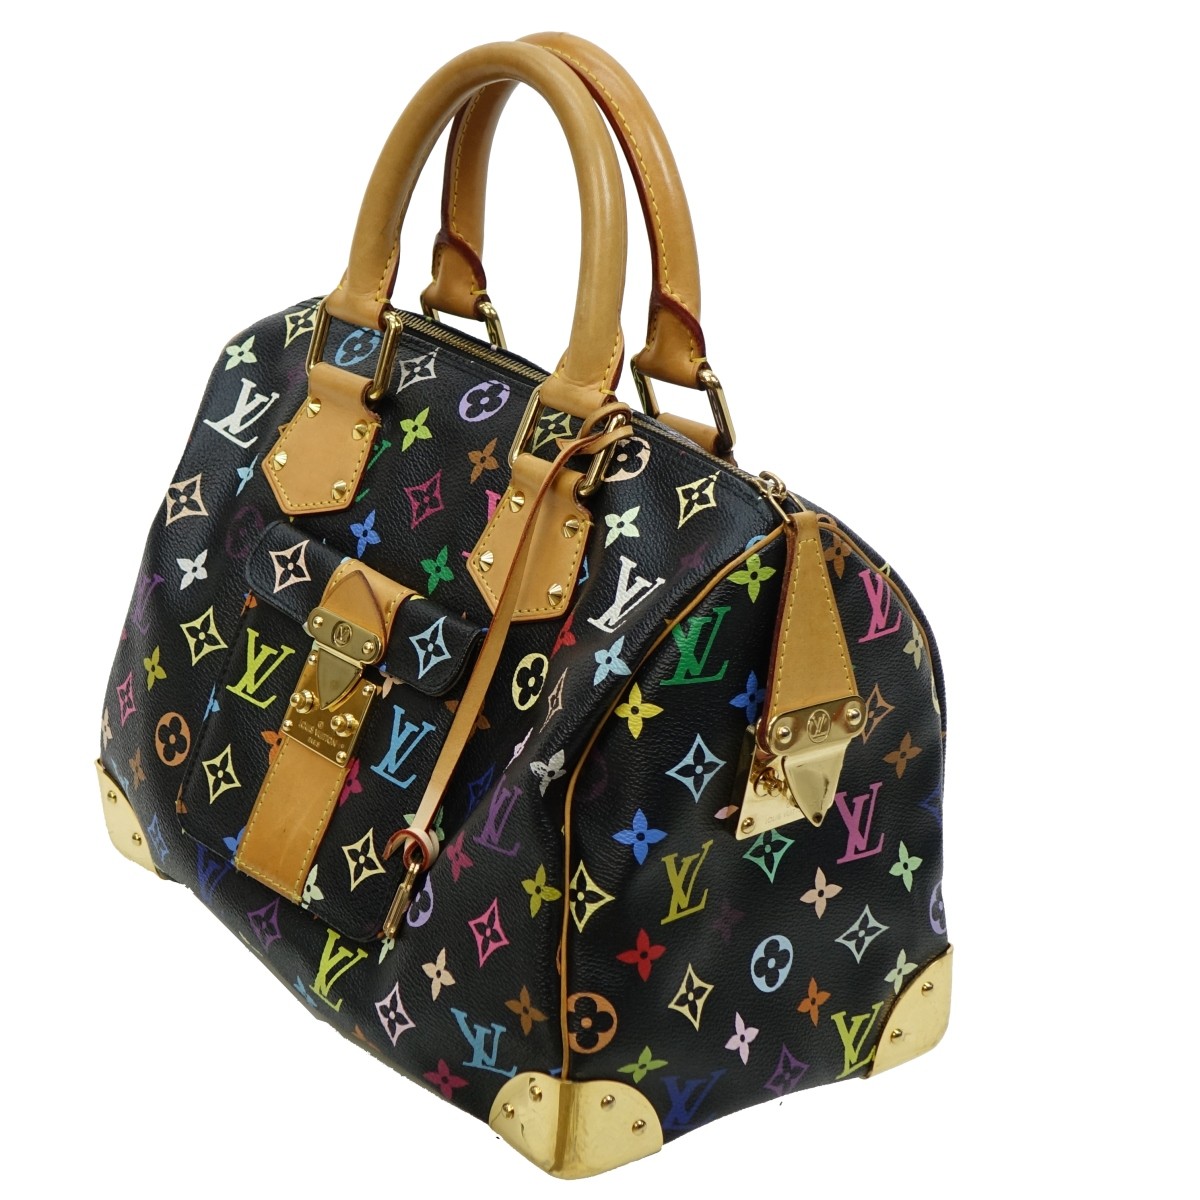 Louis Vuitton 30 Speedy Handbag